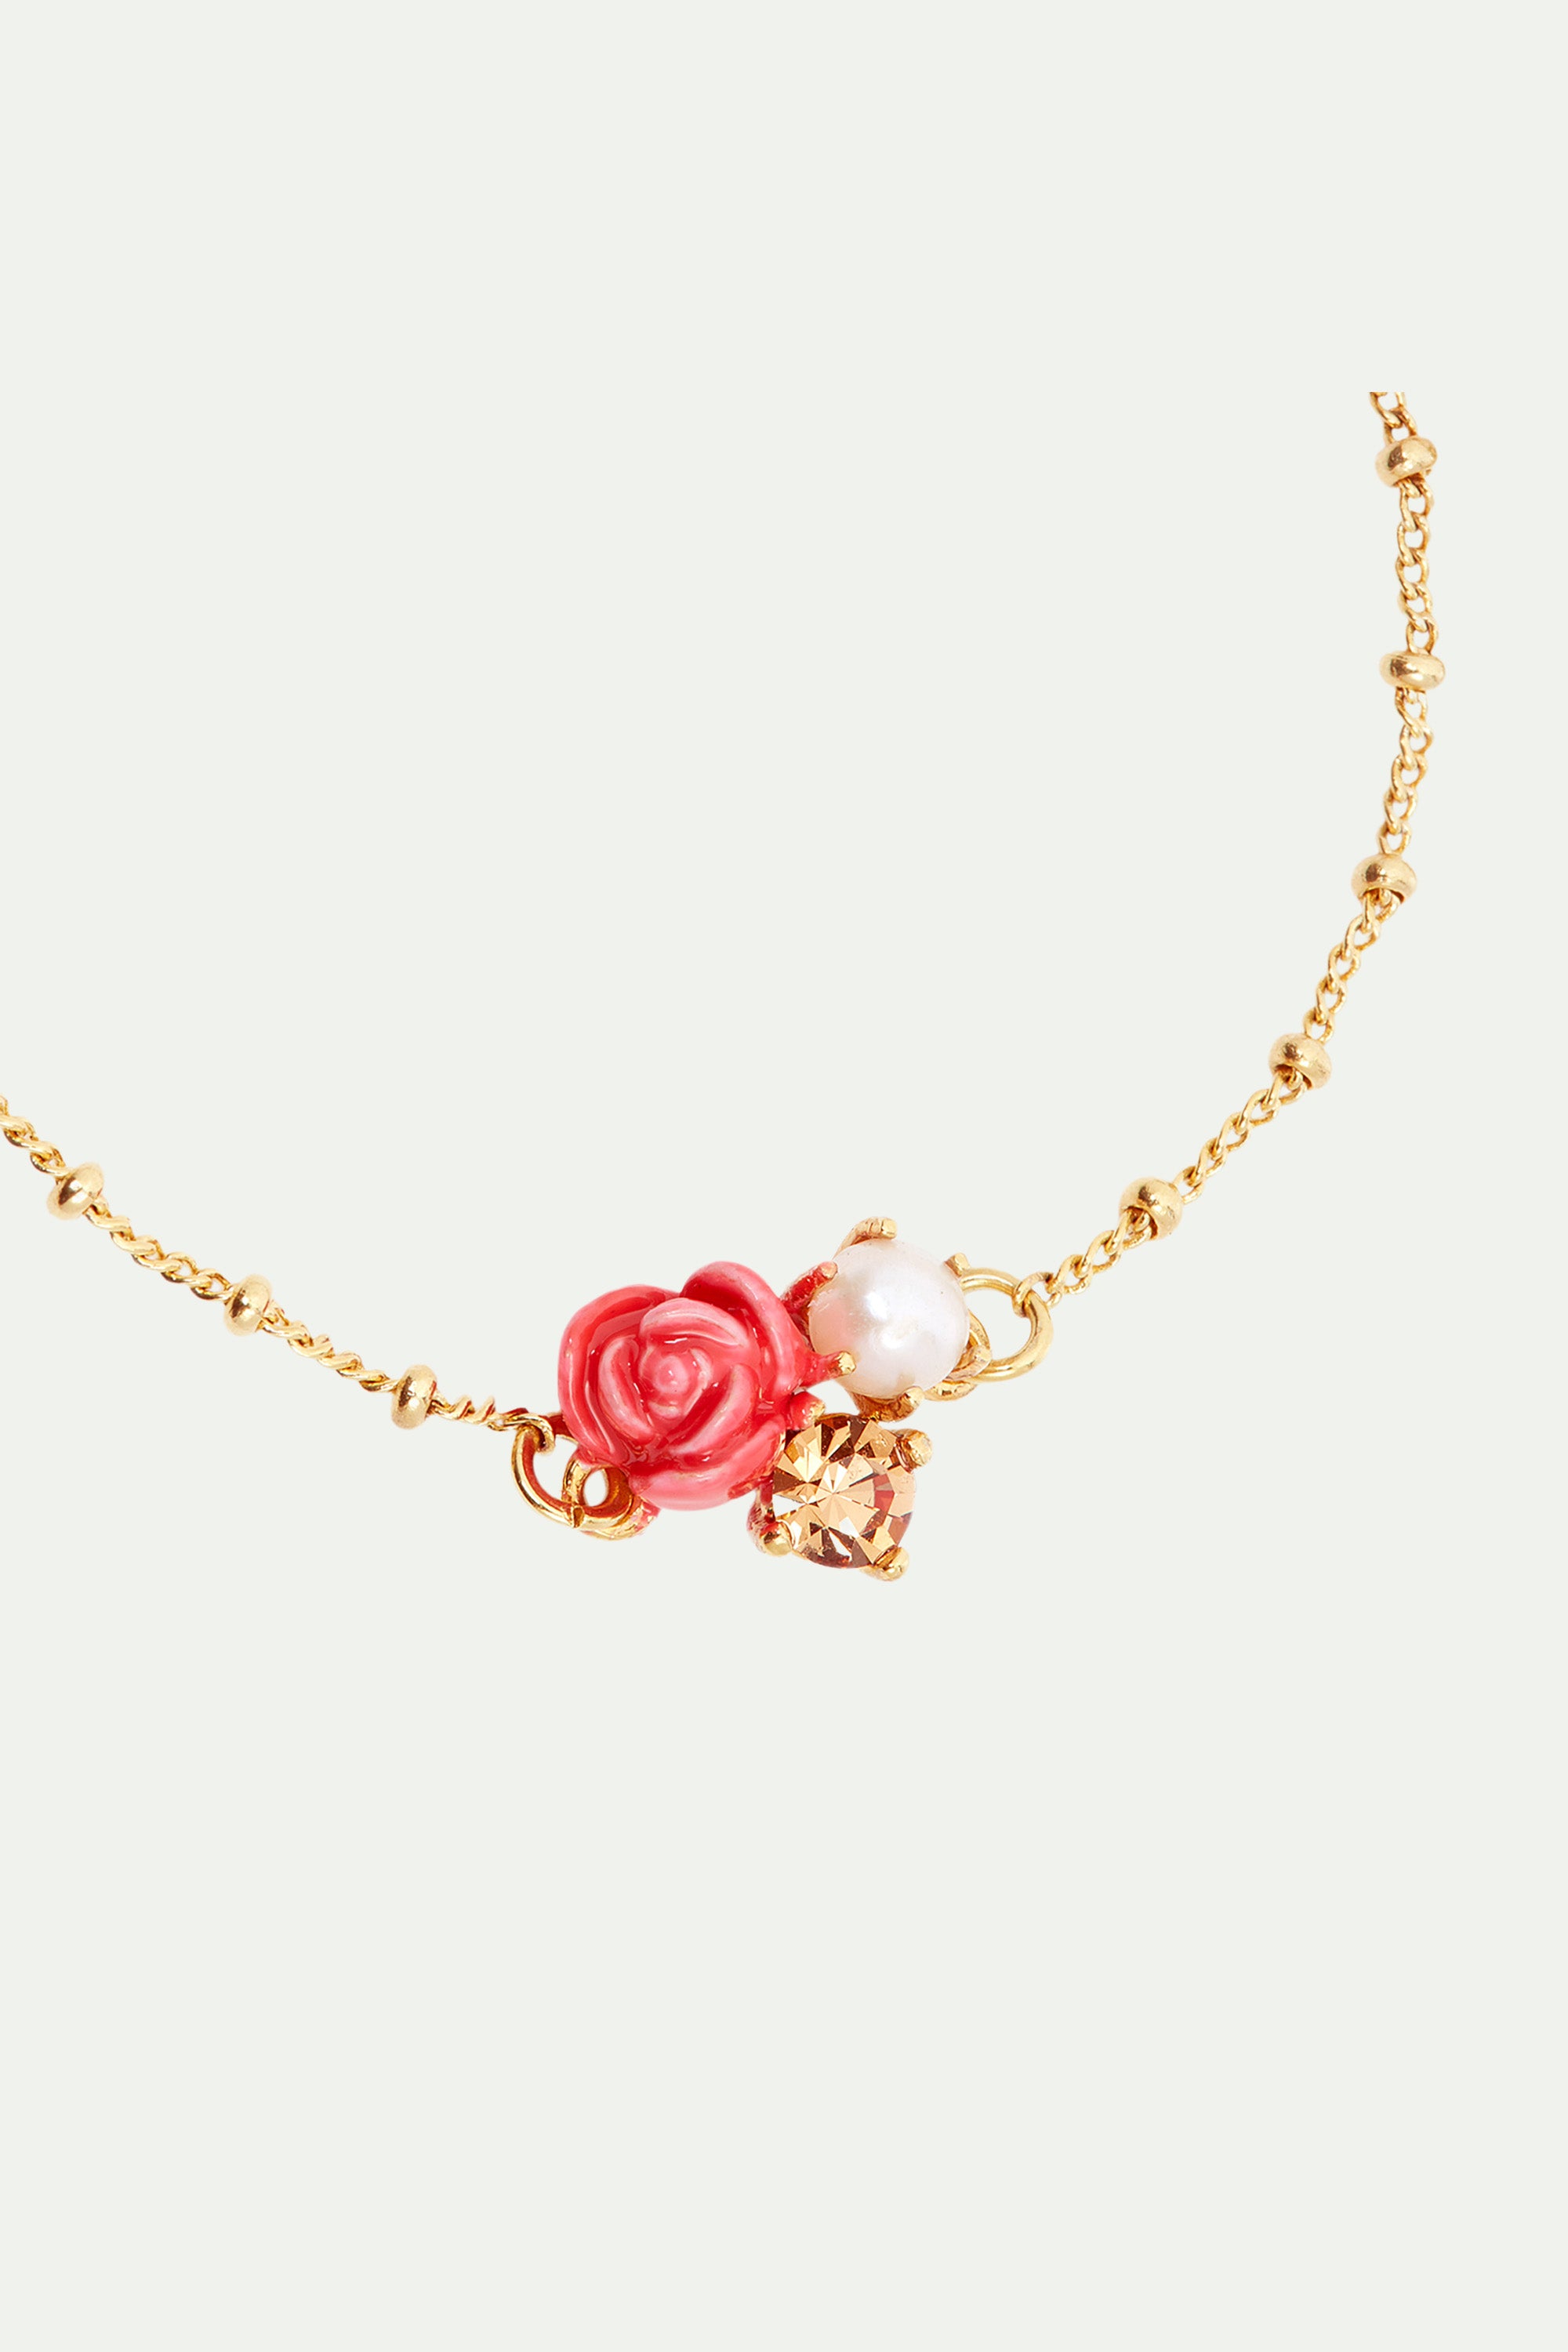 Bracelet fin rose, perle de culture et pierre